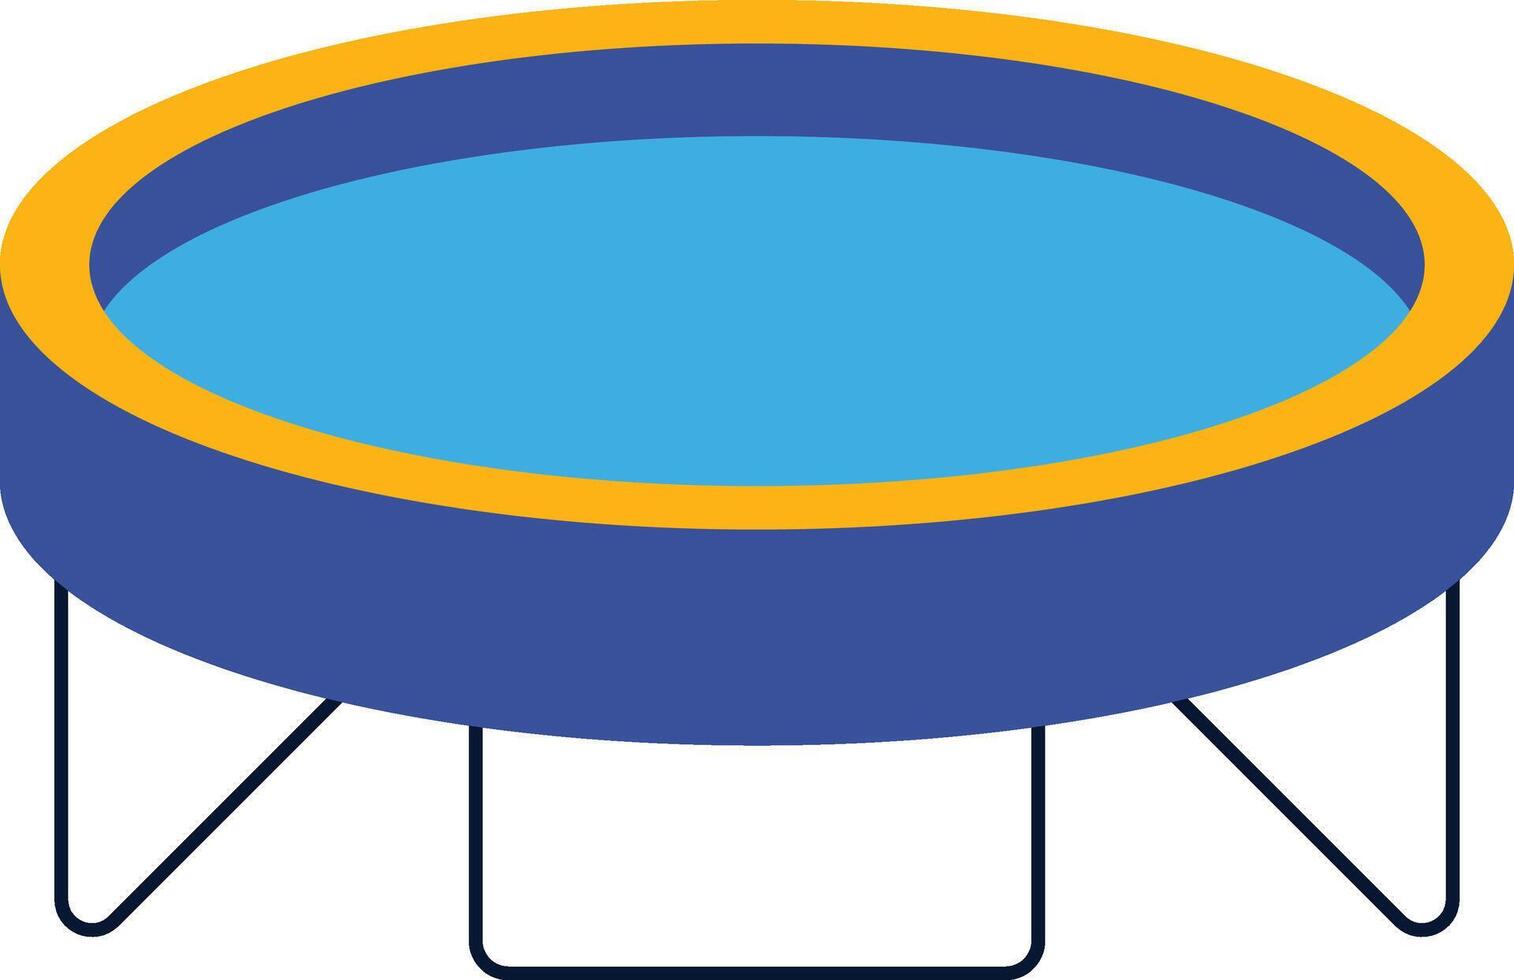 Trampoline Icon. Jumping trampoline icon vector